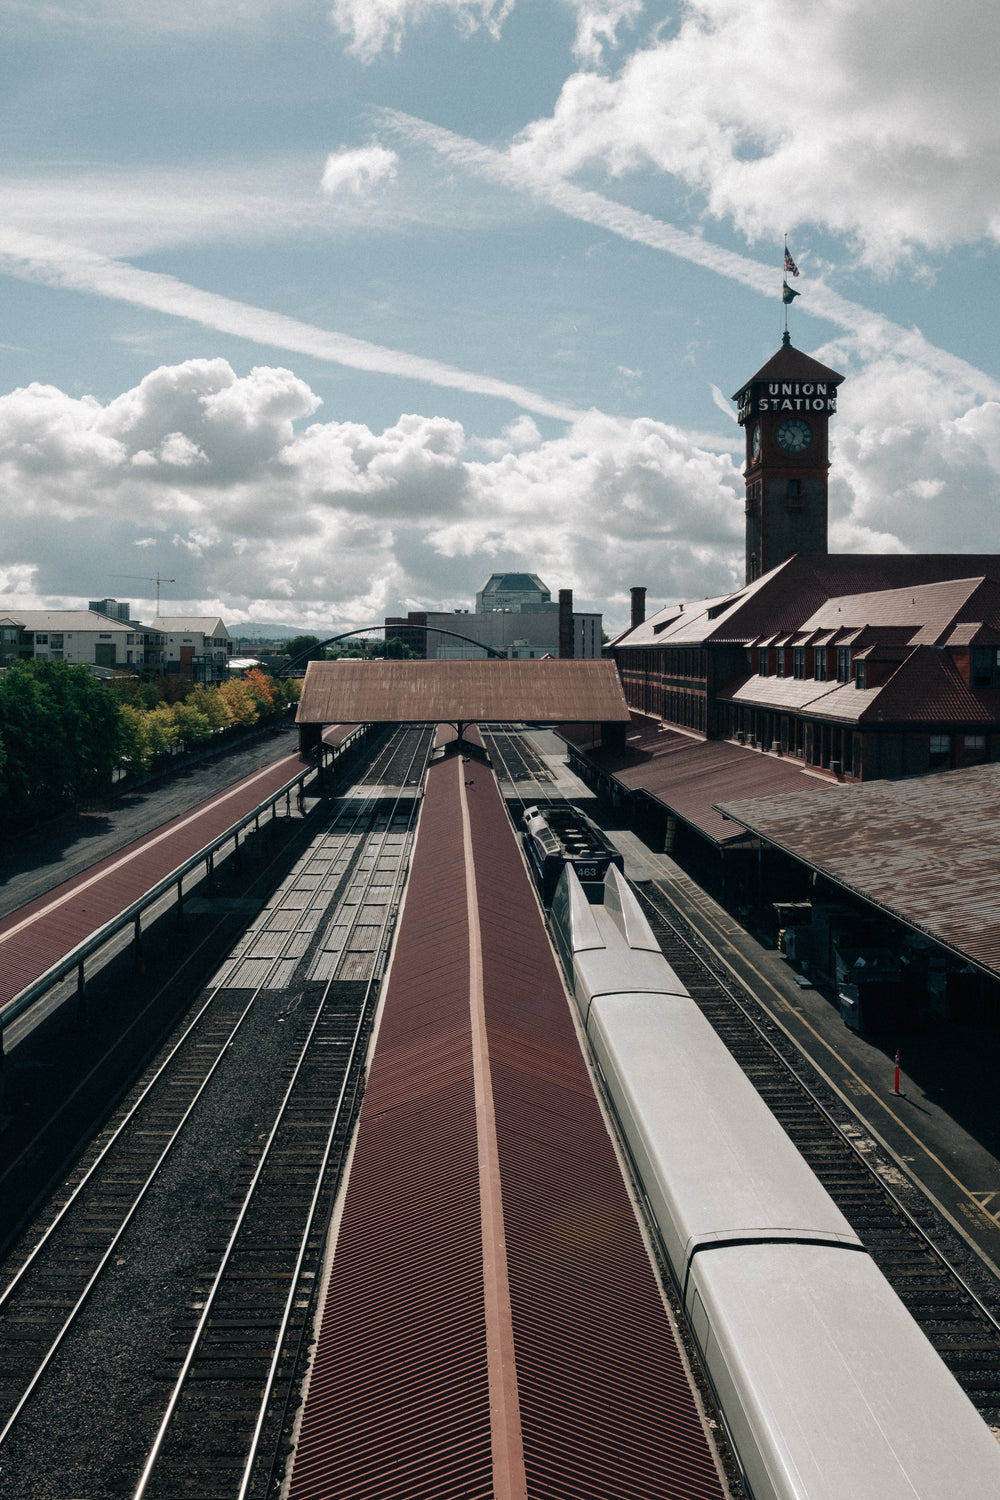 train station tracks and platforms